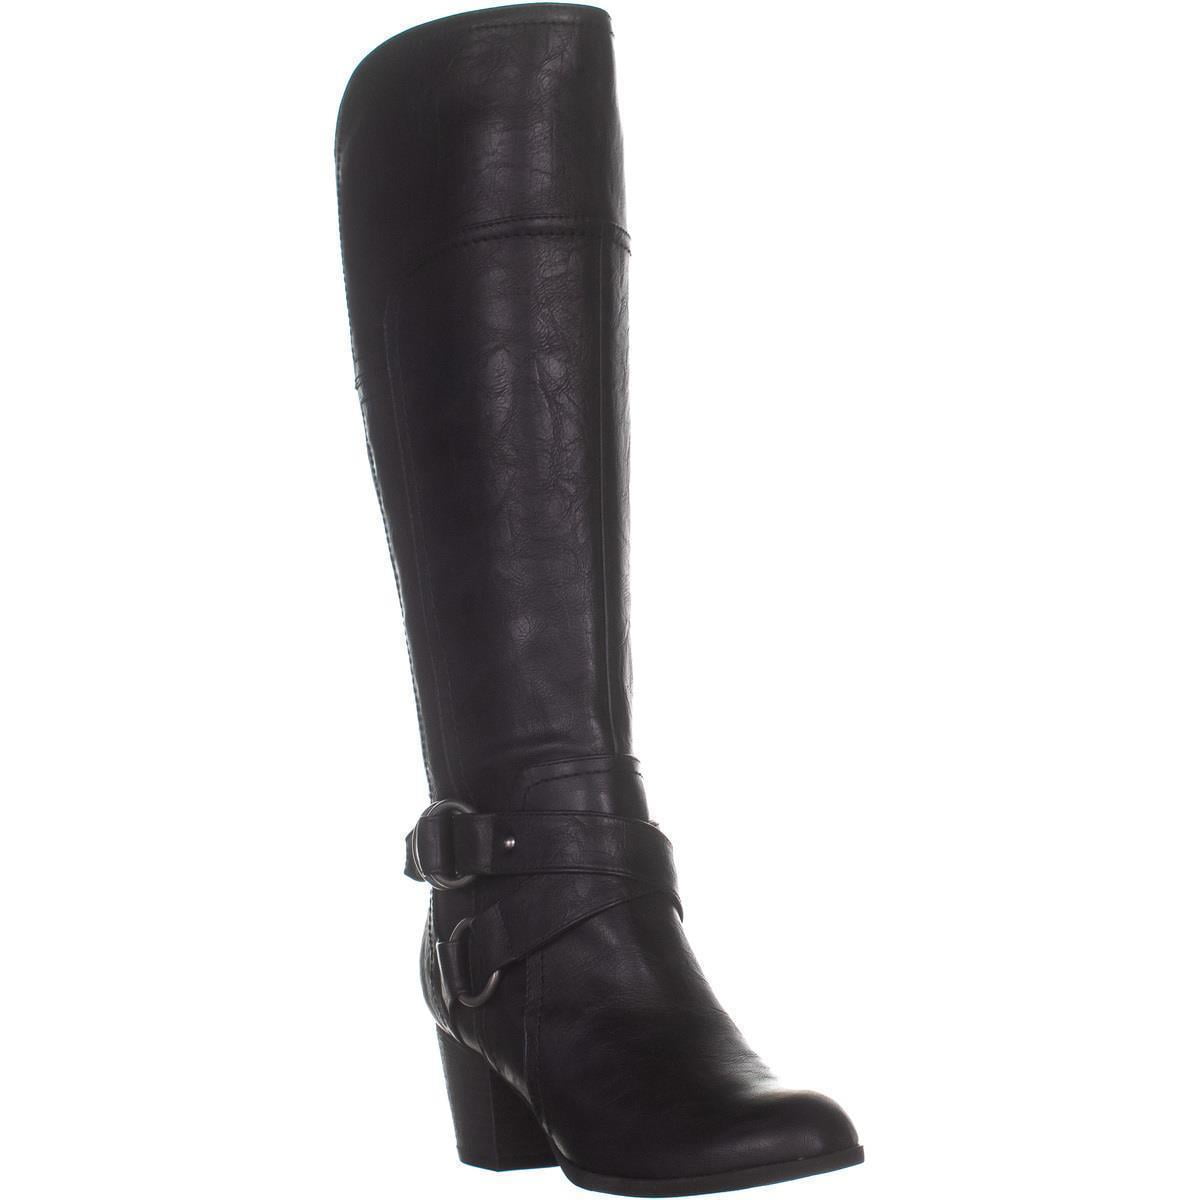 Womens Indigo Rd. Simona Knee-High Boots, Black, 8 US - Walmart.com